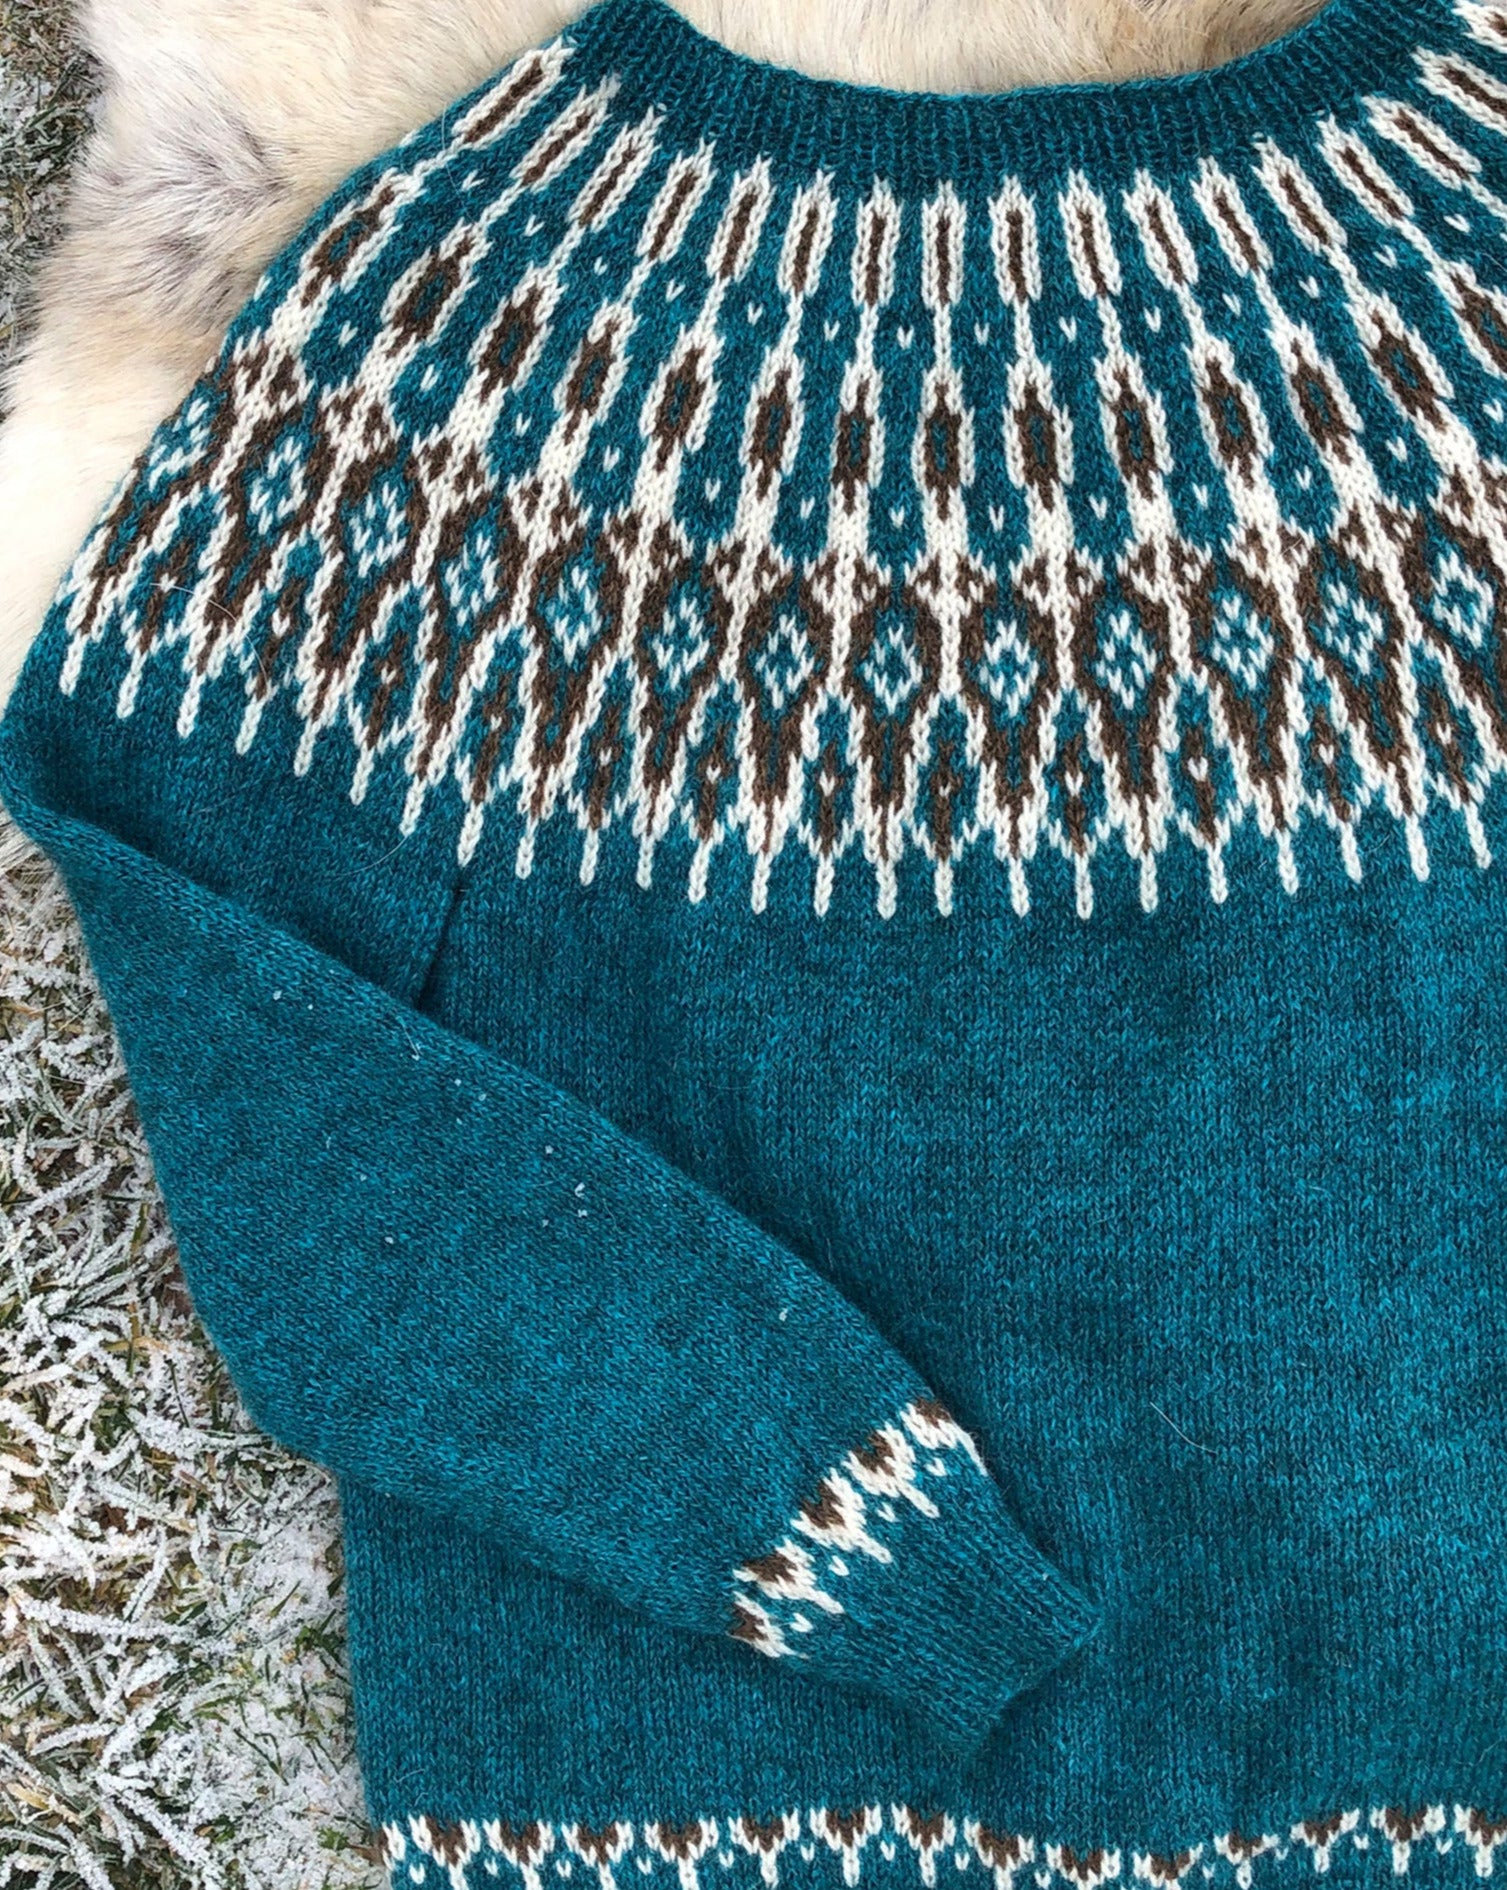 Tussellad sweater, turquoise - Wilderness sweater 1- Linka Neumann